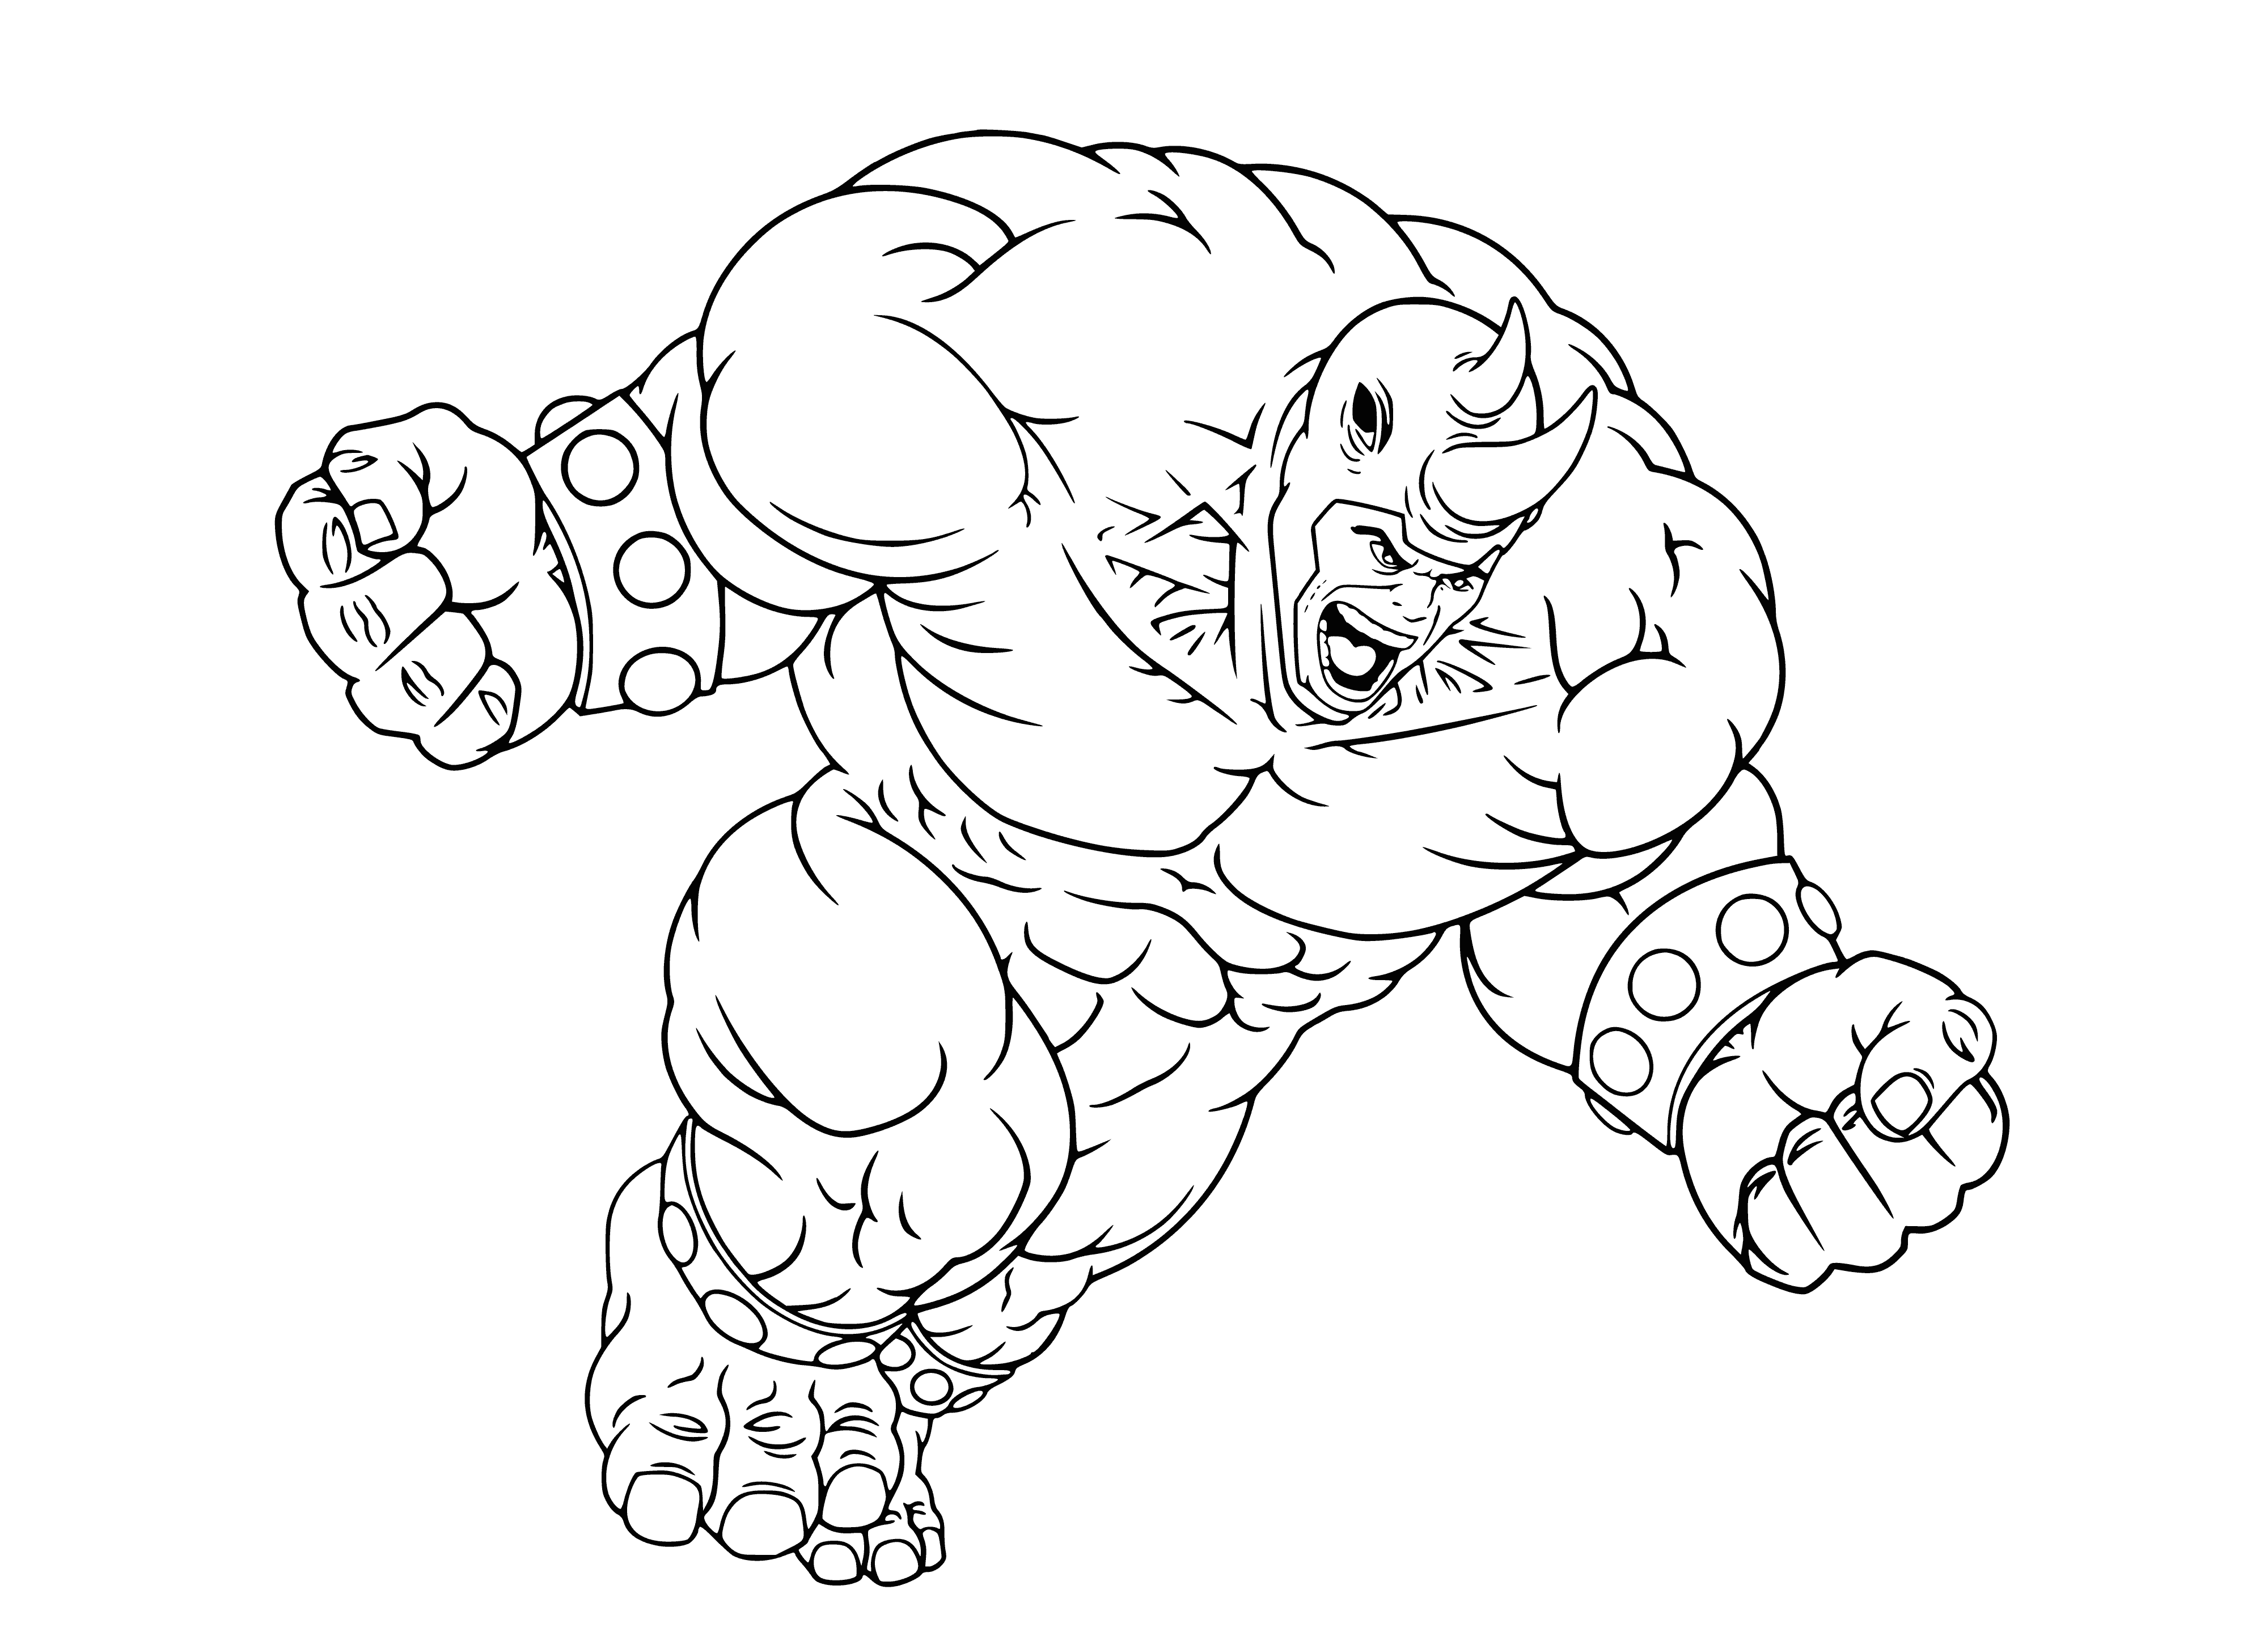 Rhino man coloring page